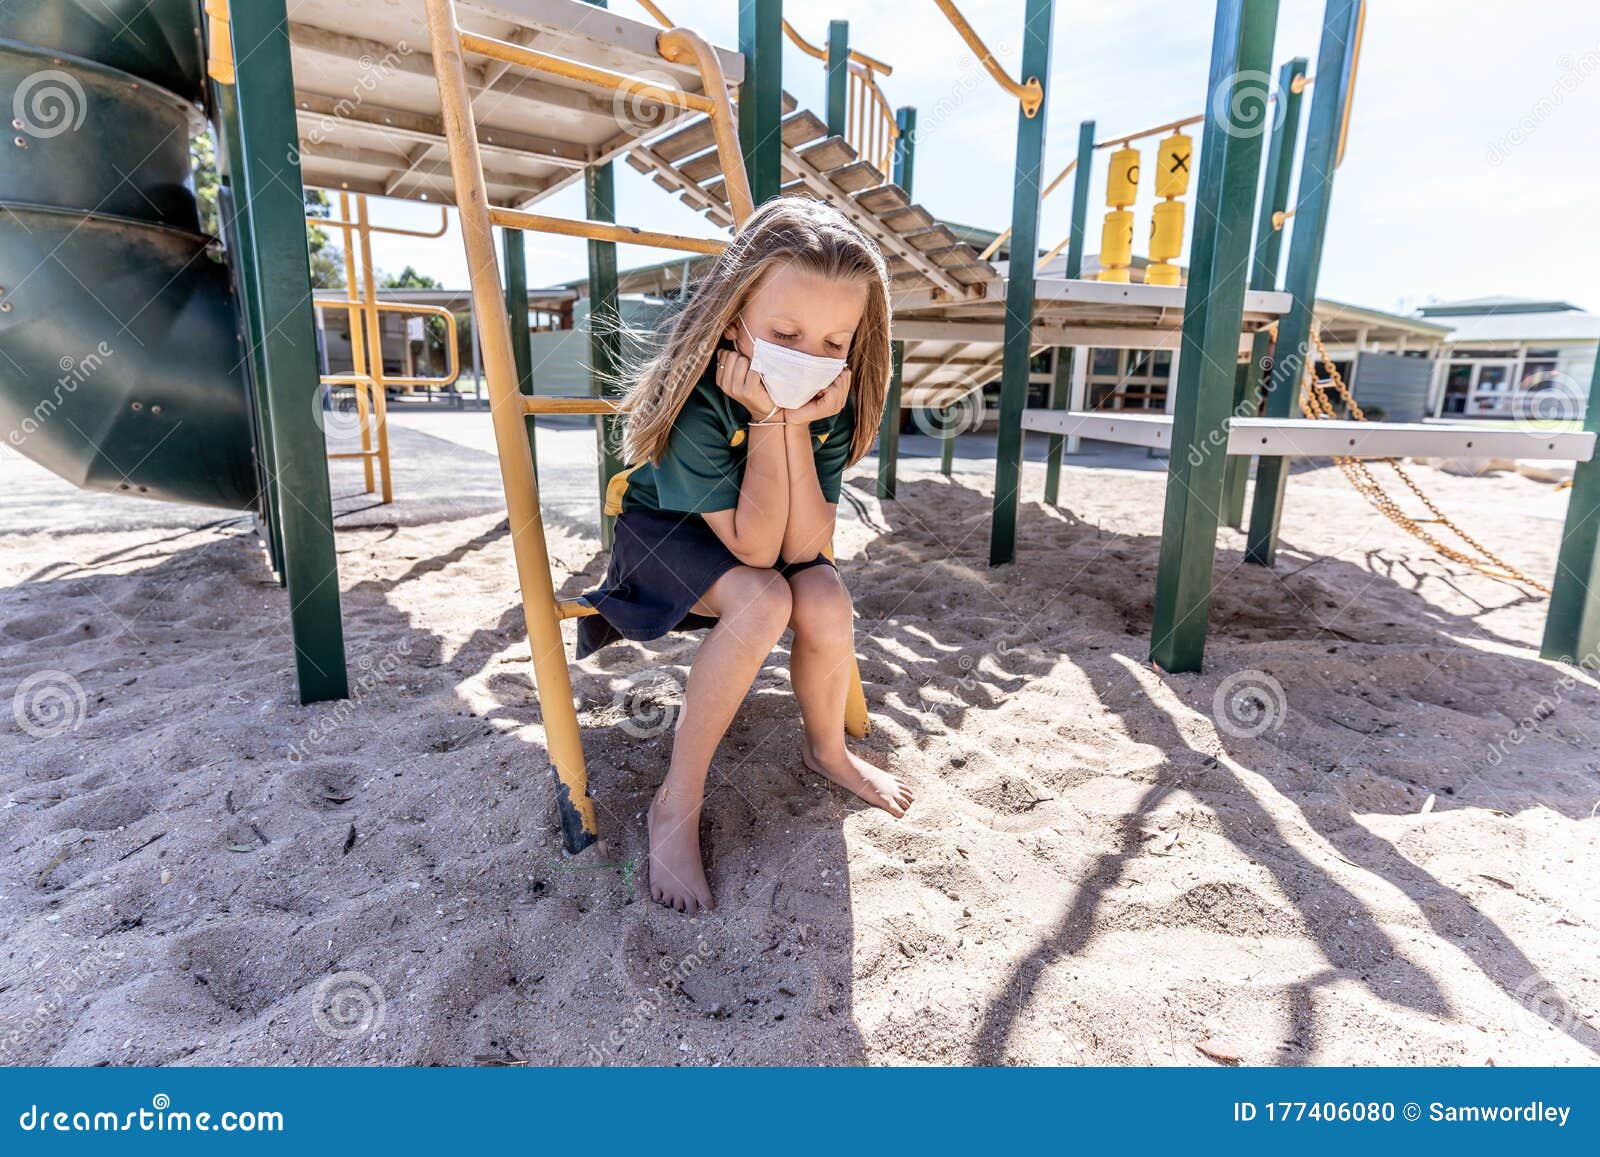 schools closures coronavirus lockdown. bored school kid alone in playground feeling sad and lonely